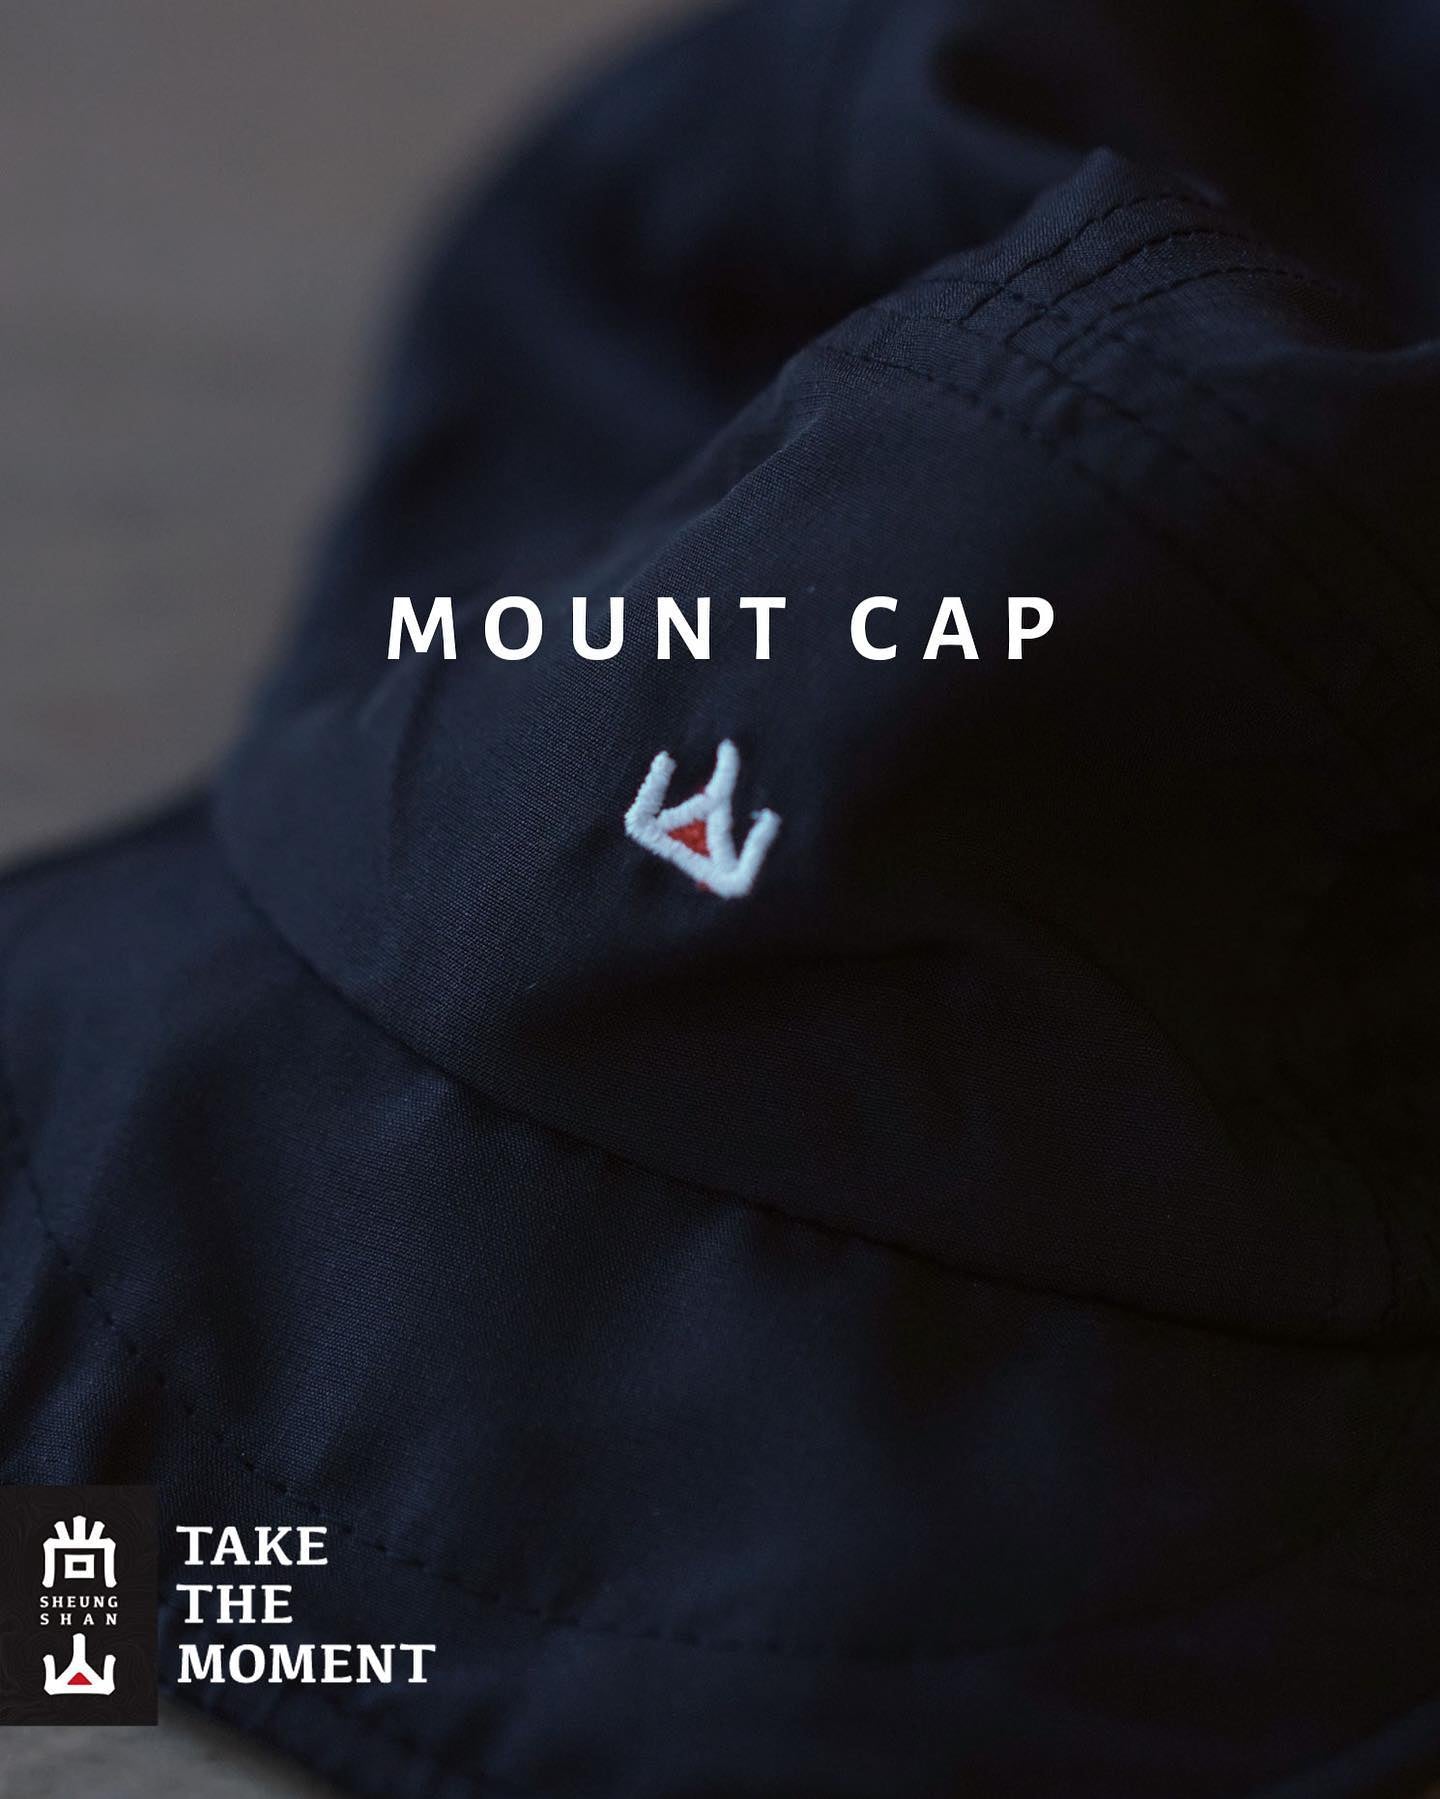 Sheungshan尚山 MOUNT CAP 山岳帽